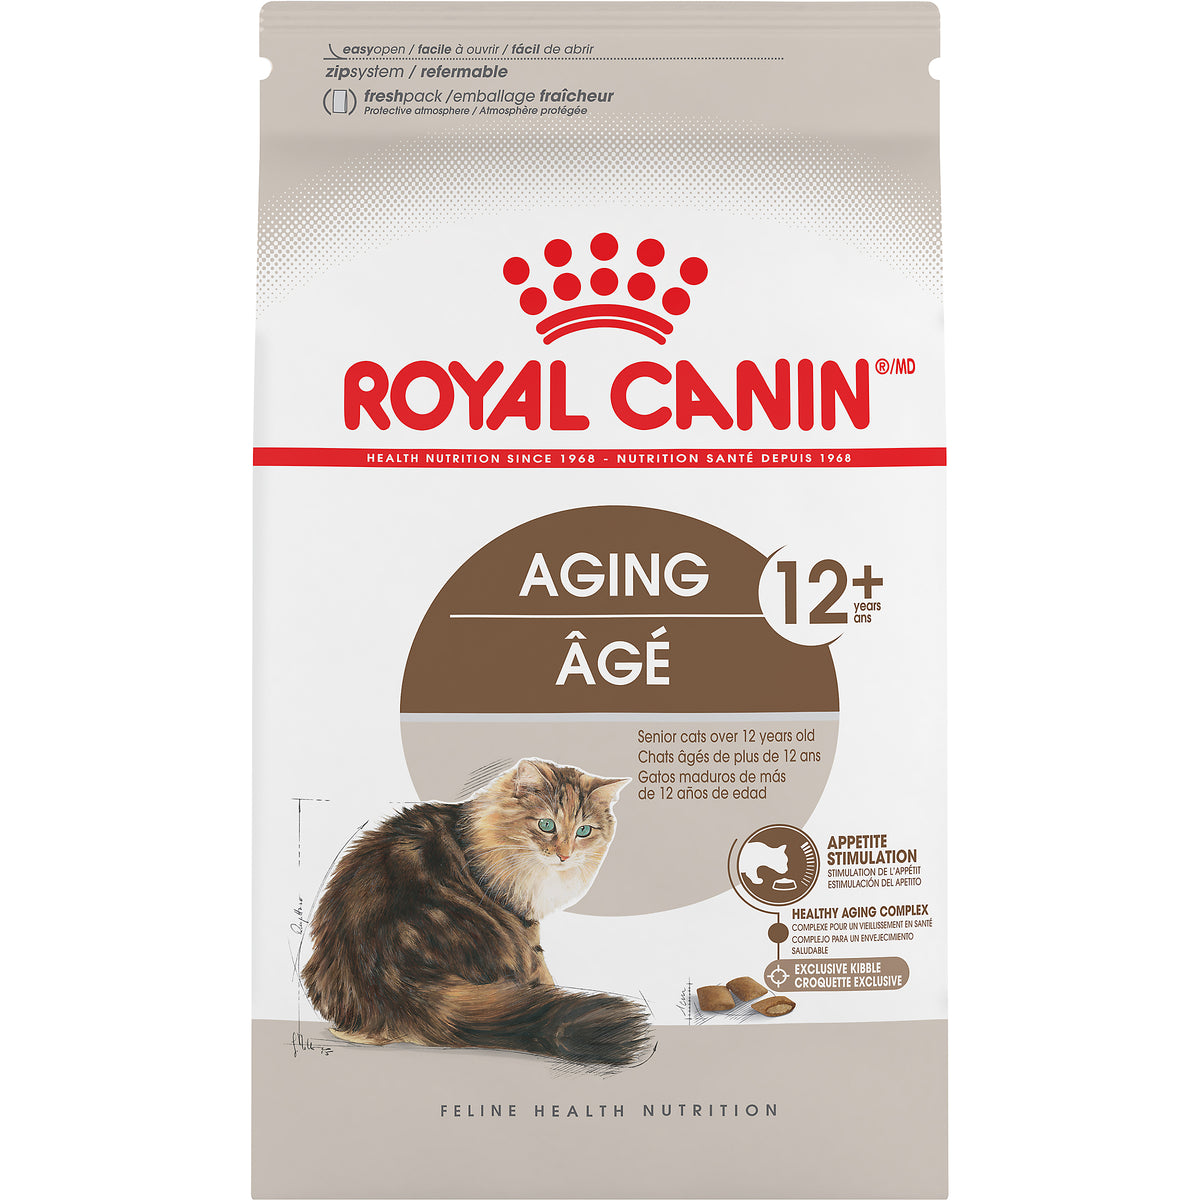 Royal Canin Aging Cat 12+ - Cat Food (6lb)